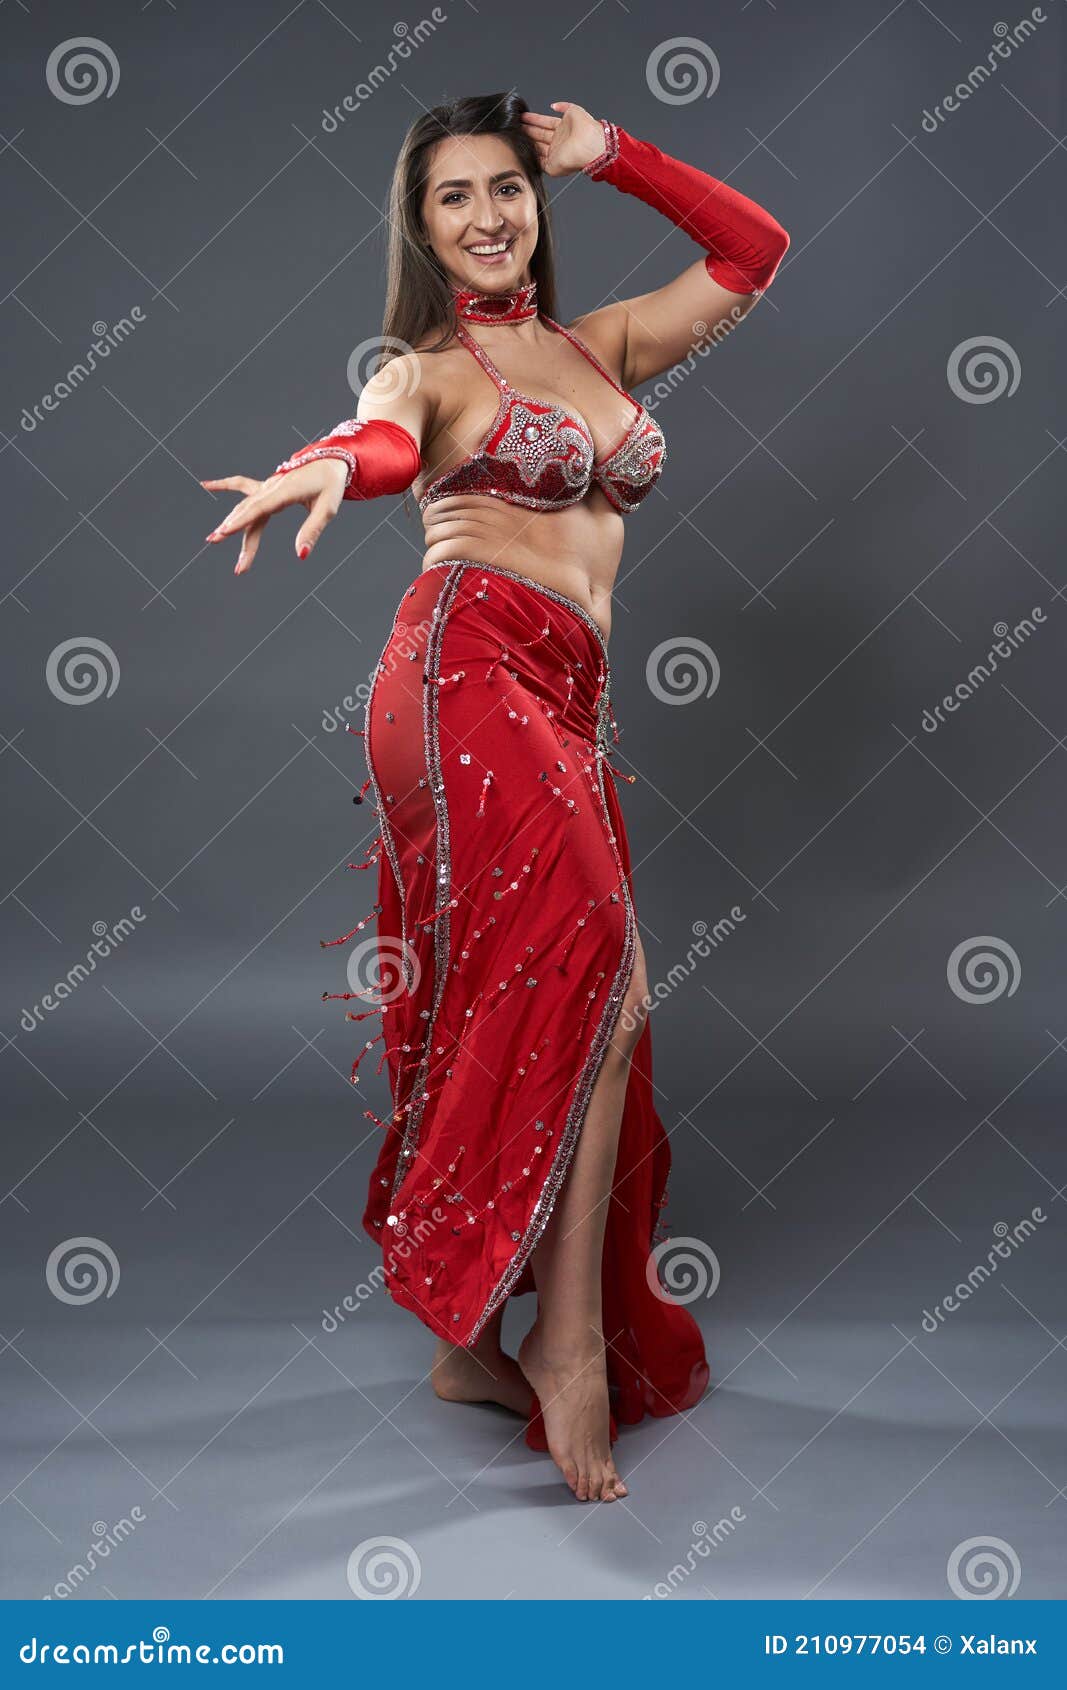 Bailarina árabe foto de archivo. Imagen de sujetador - 210977054